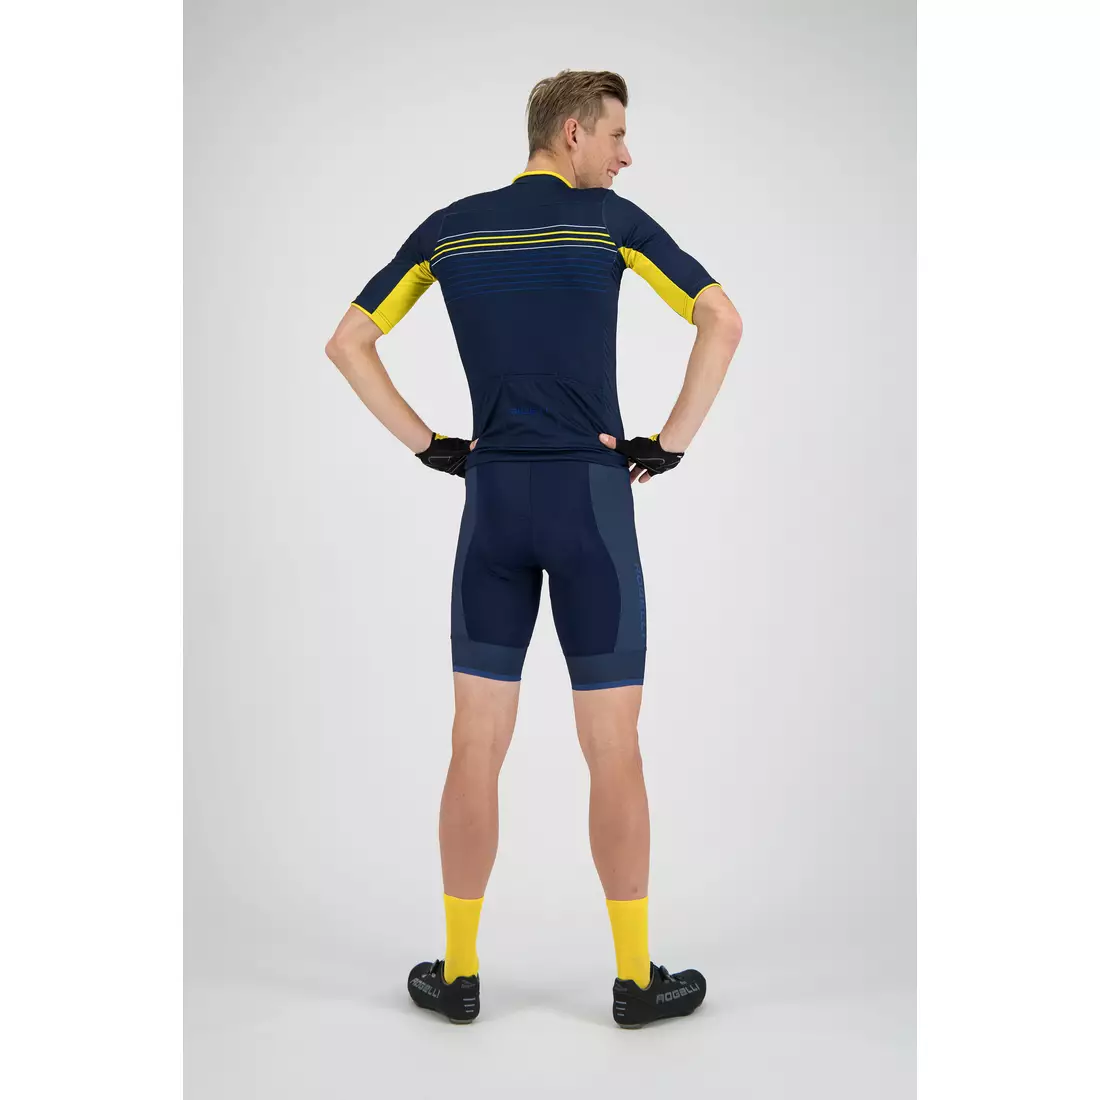 Rogelli Kalon 001.090 pánsky cyklistický dres, modrá / žltá